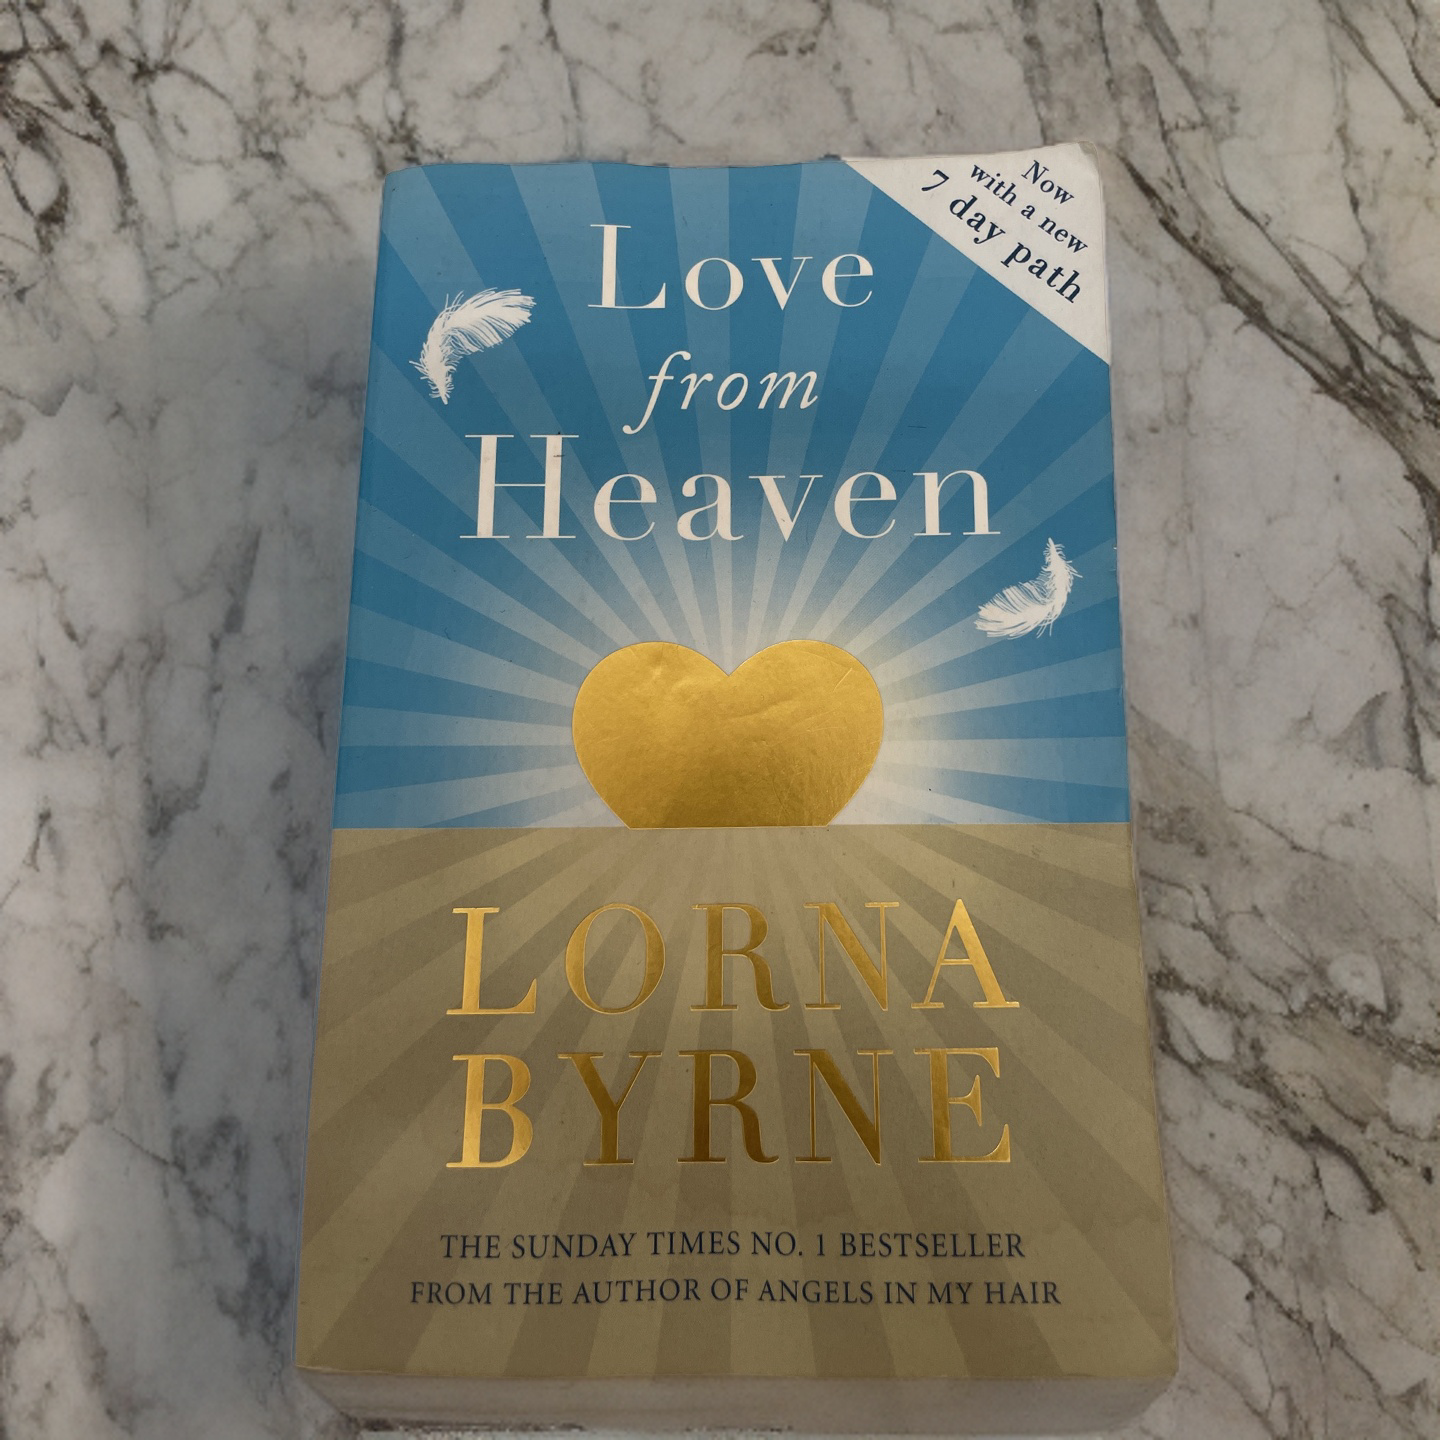 Rubynee Love from heaven book by Lorna Byrne